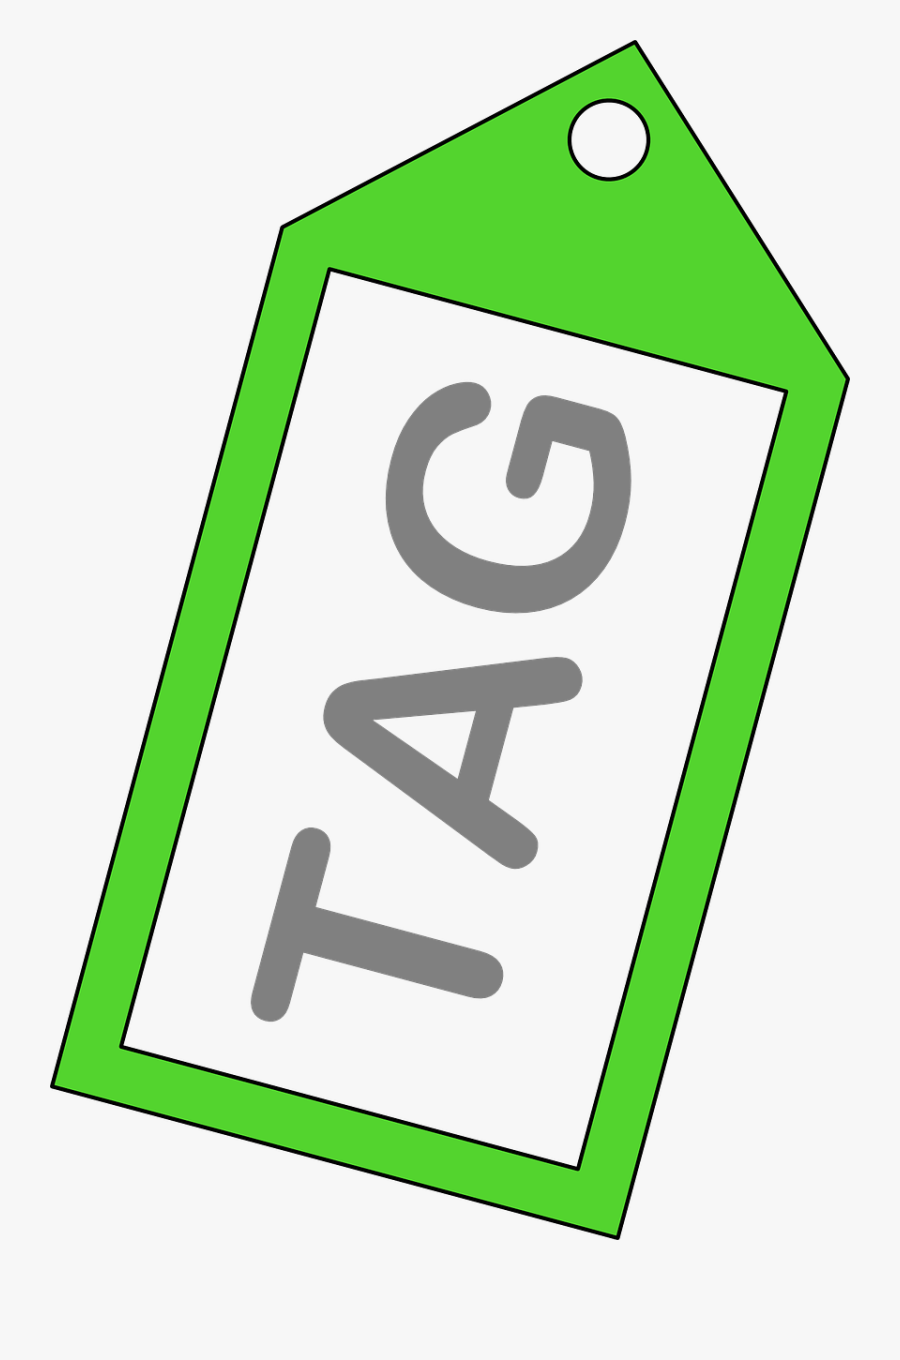 Tag Clip Art - Price Tag Clip Art, Transparent Clipart